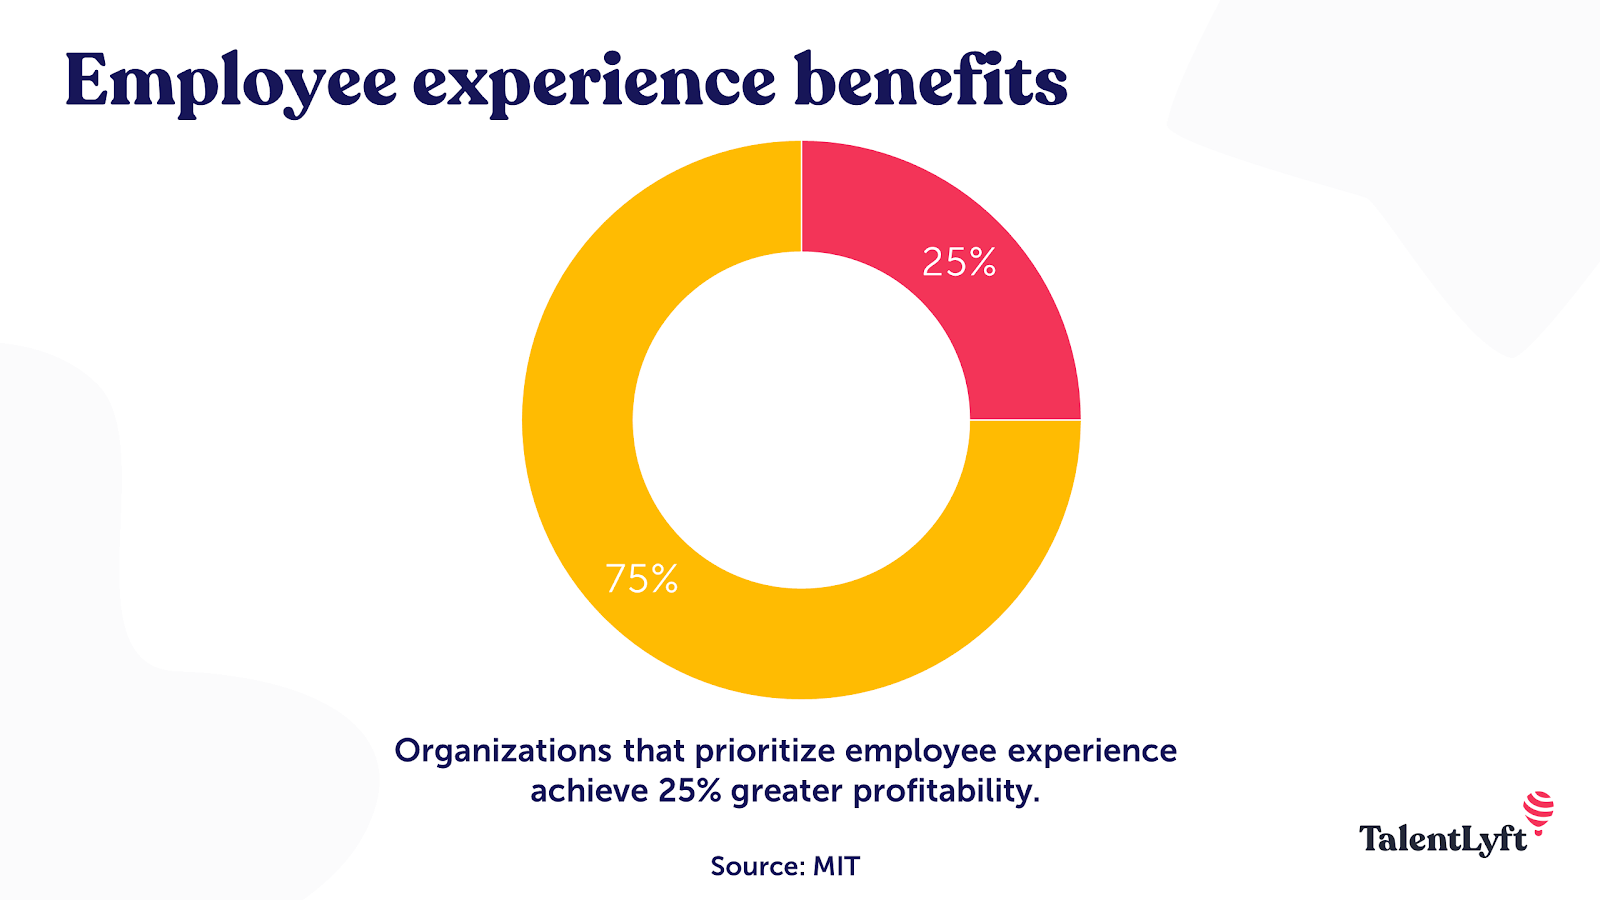 Employee experience benefits